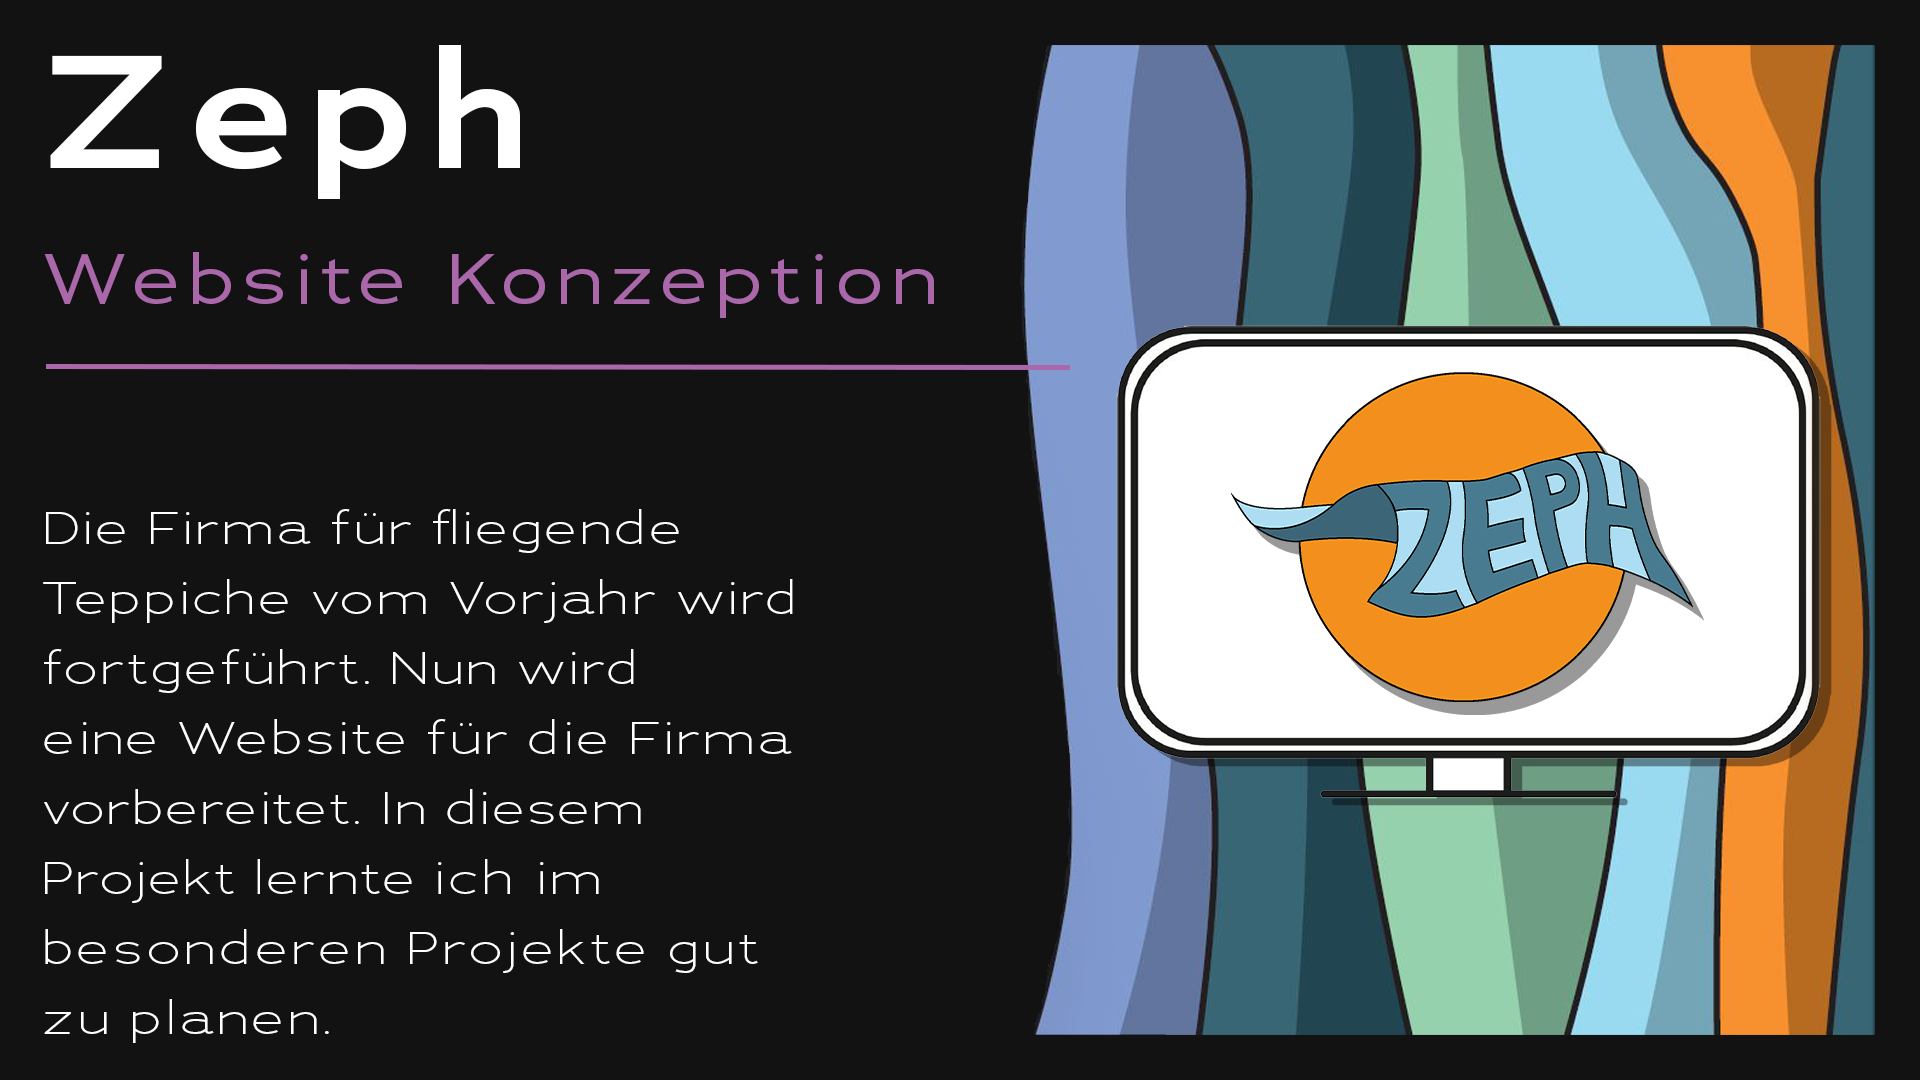 Zeph Website